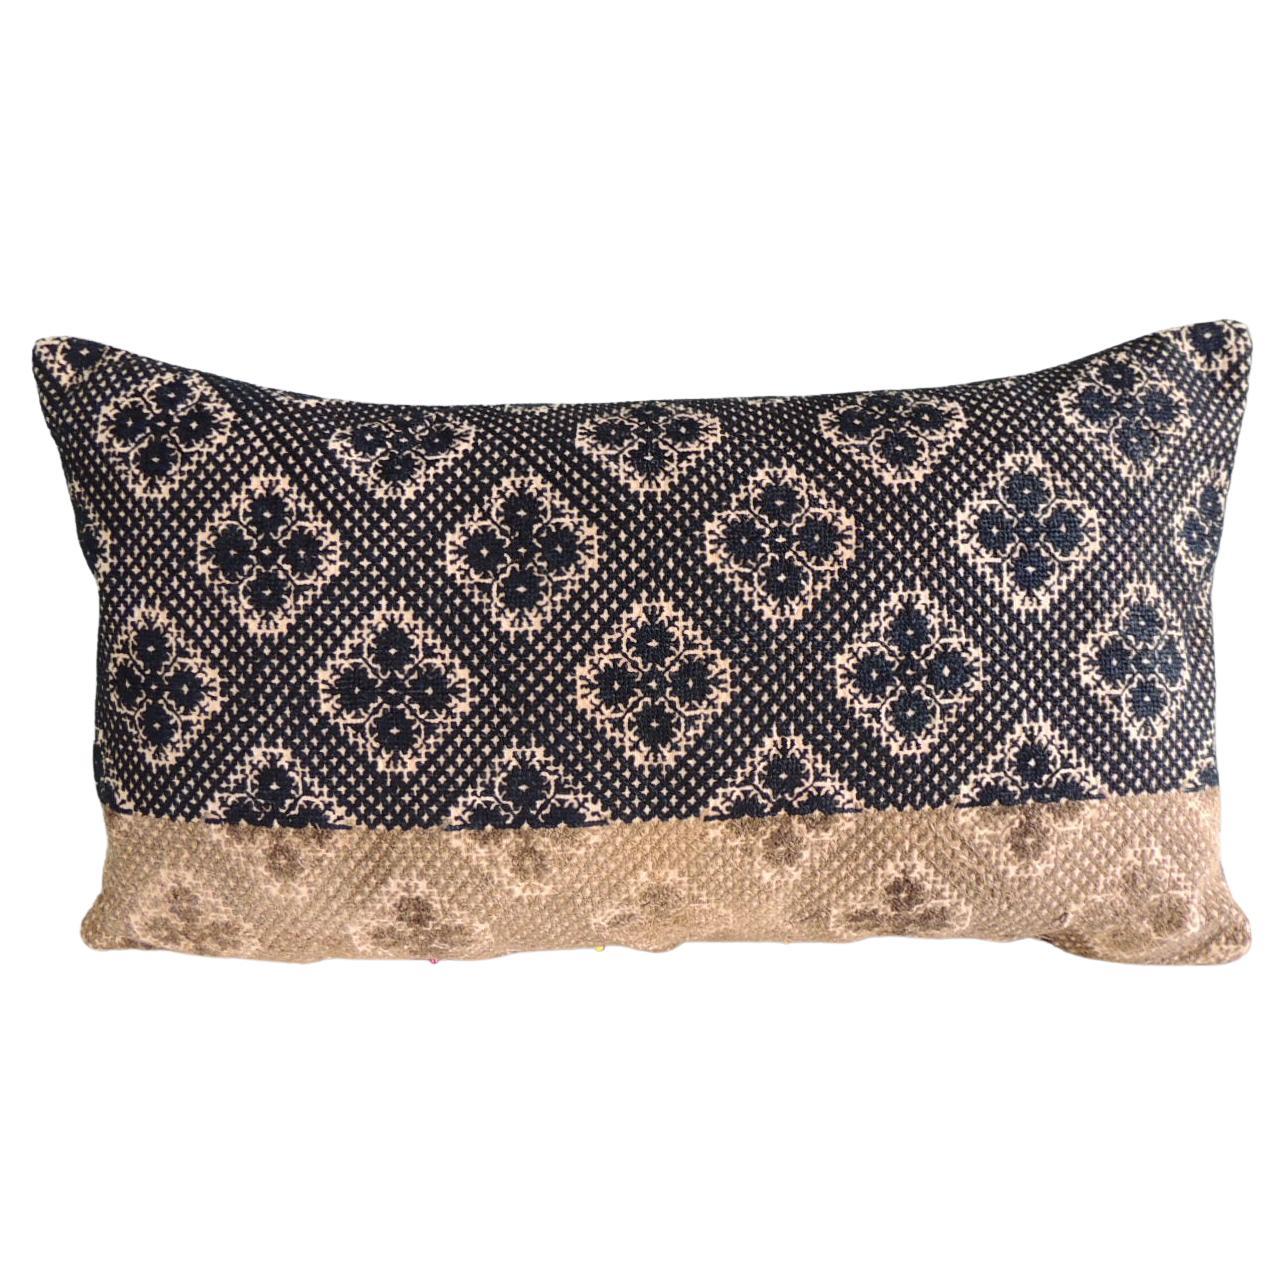 Antique Black and Grey Ombre Fez Decorative Lumbar Pillow